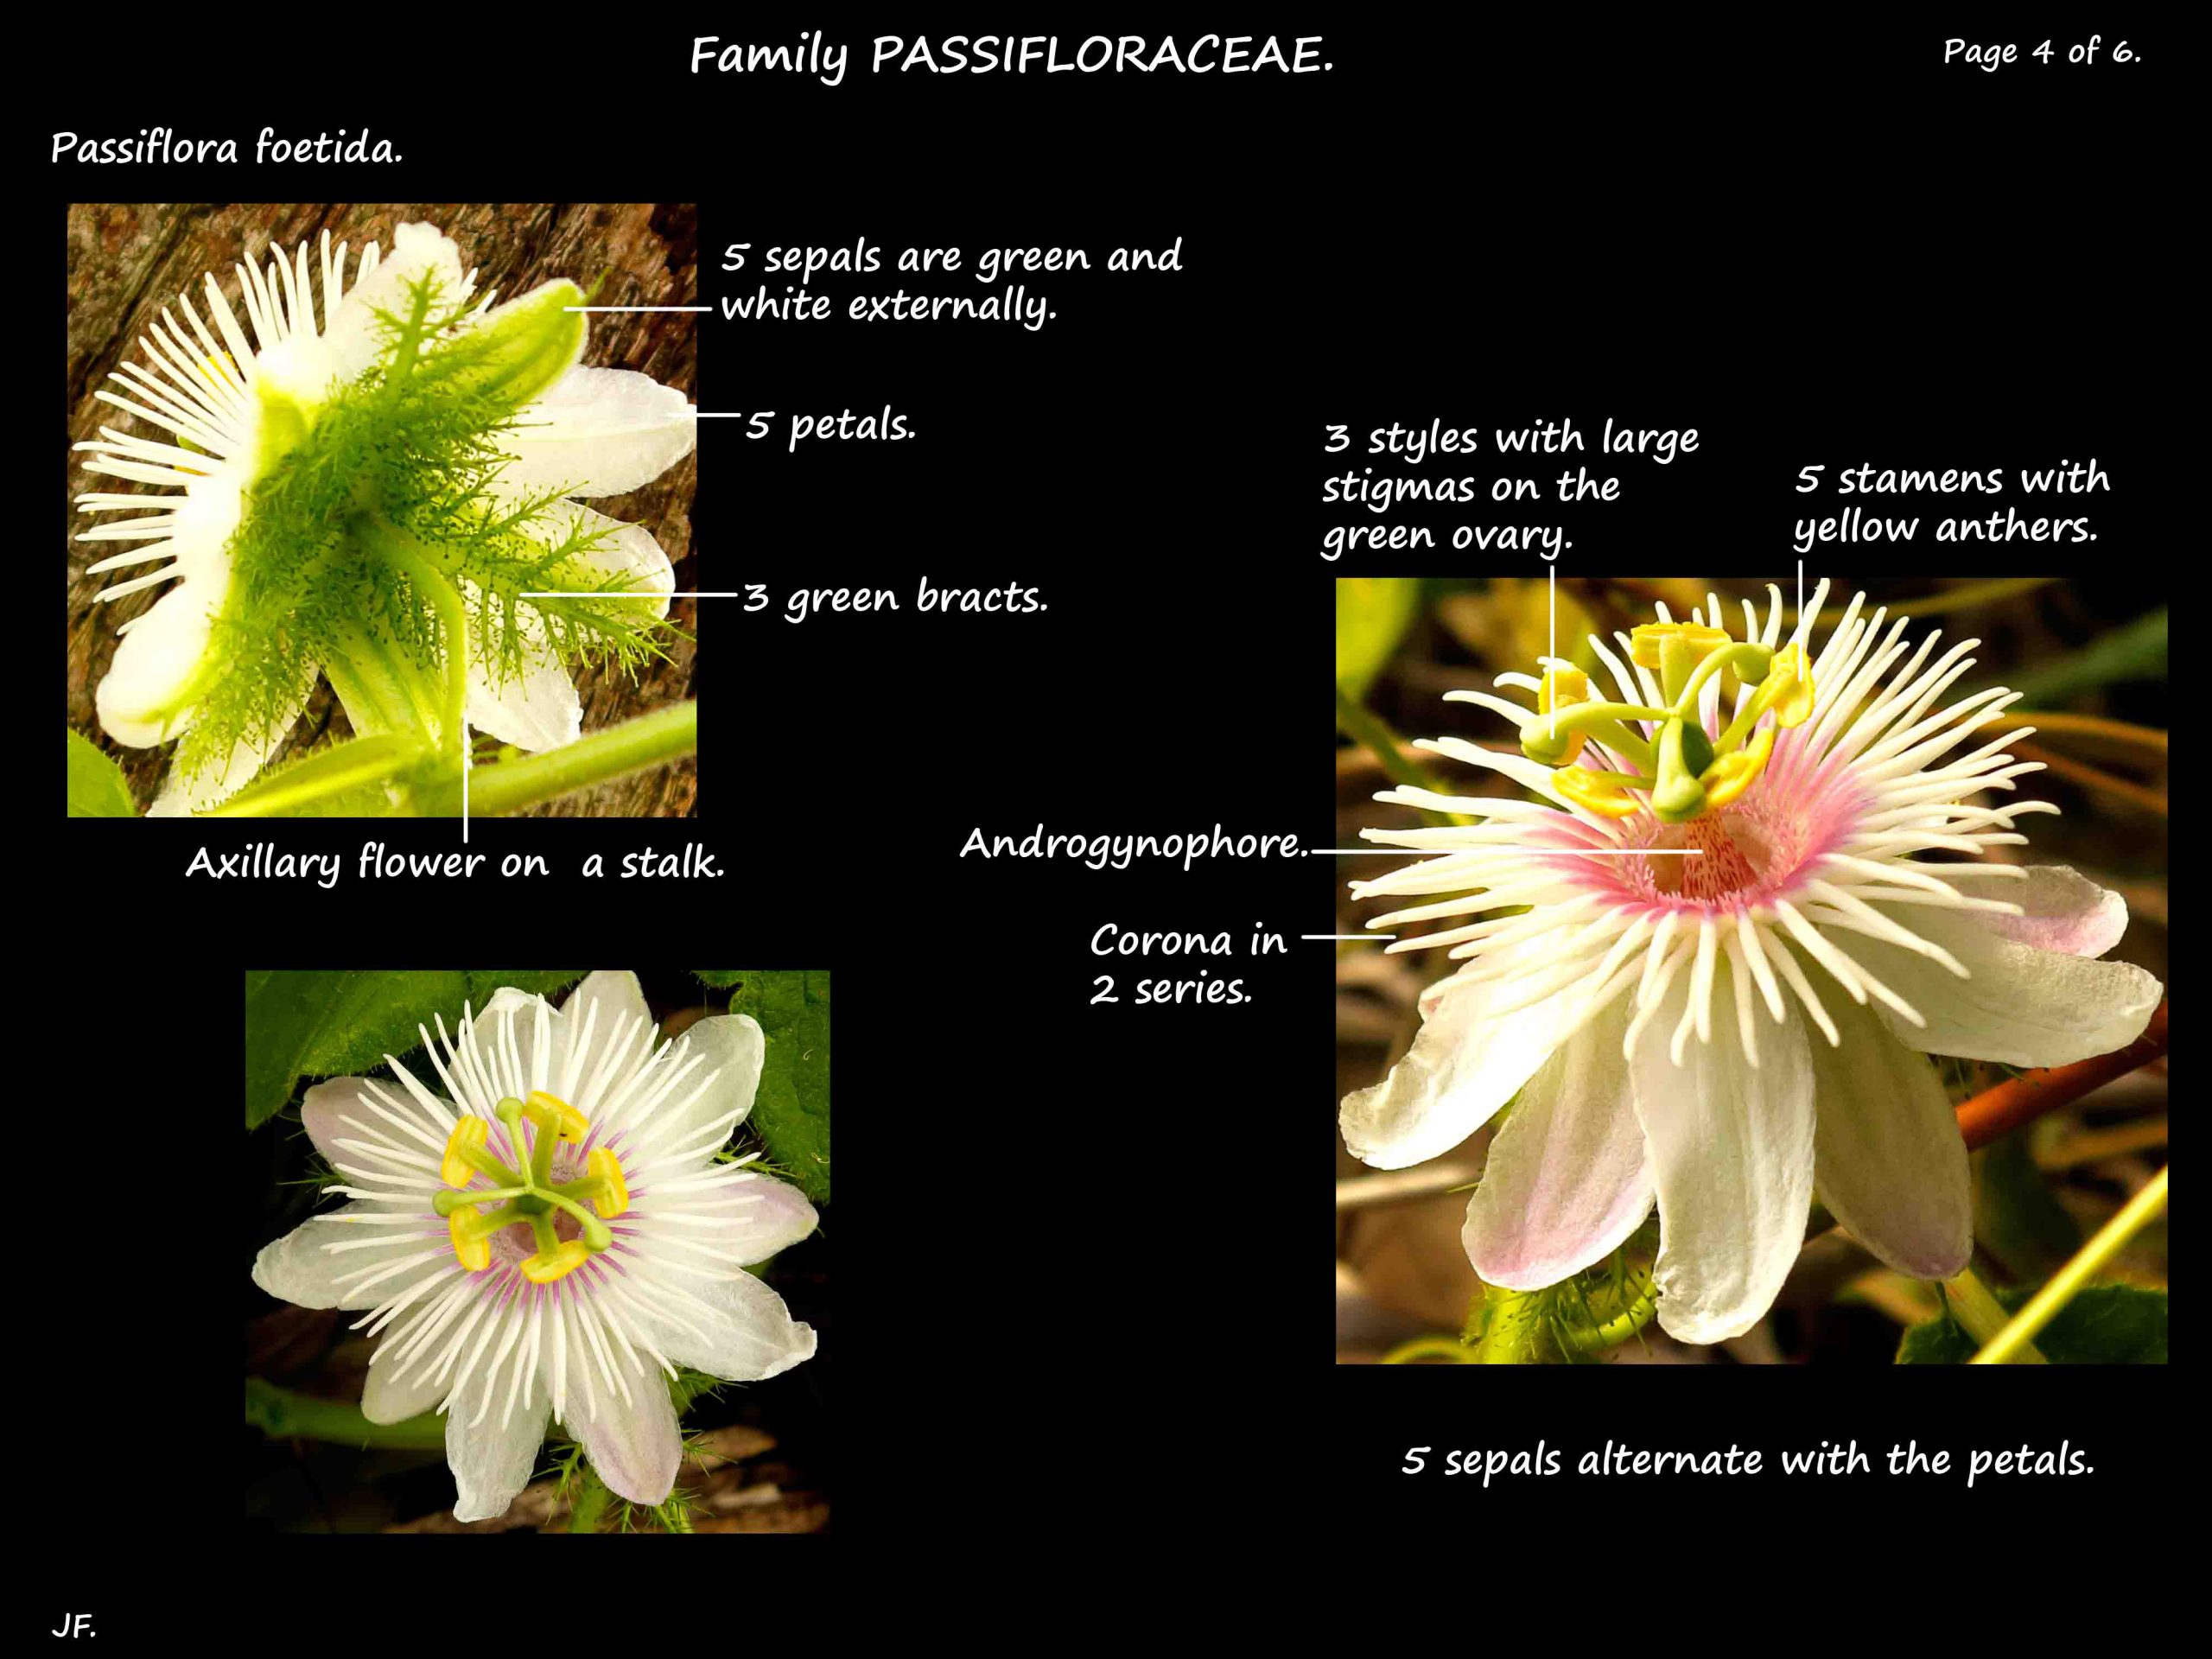 4 Passiflora foetida flowers